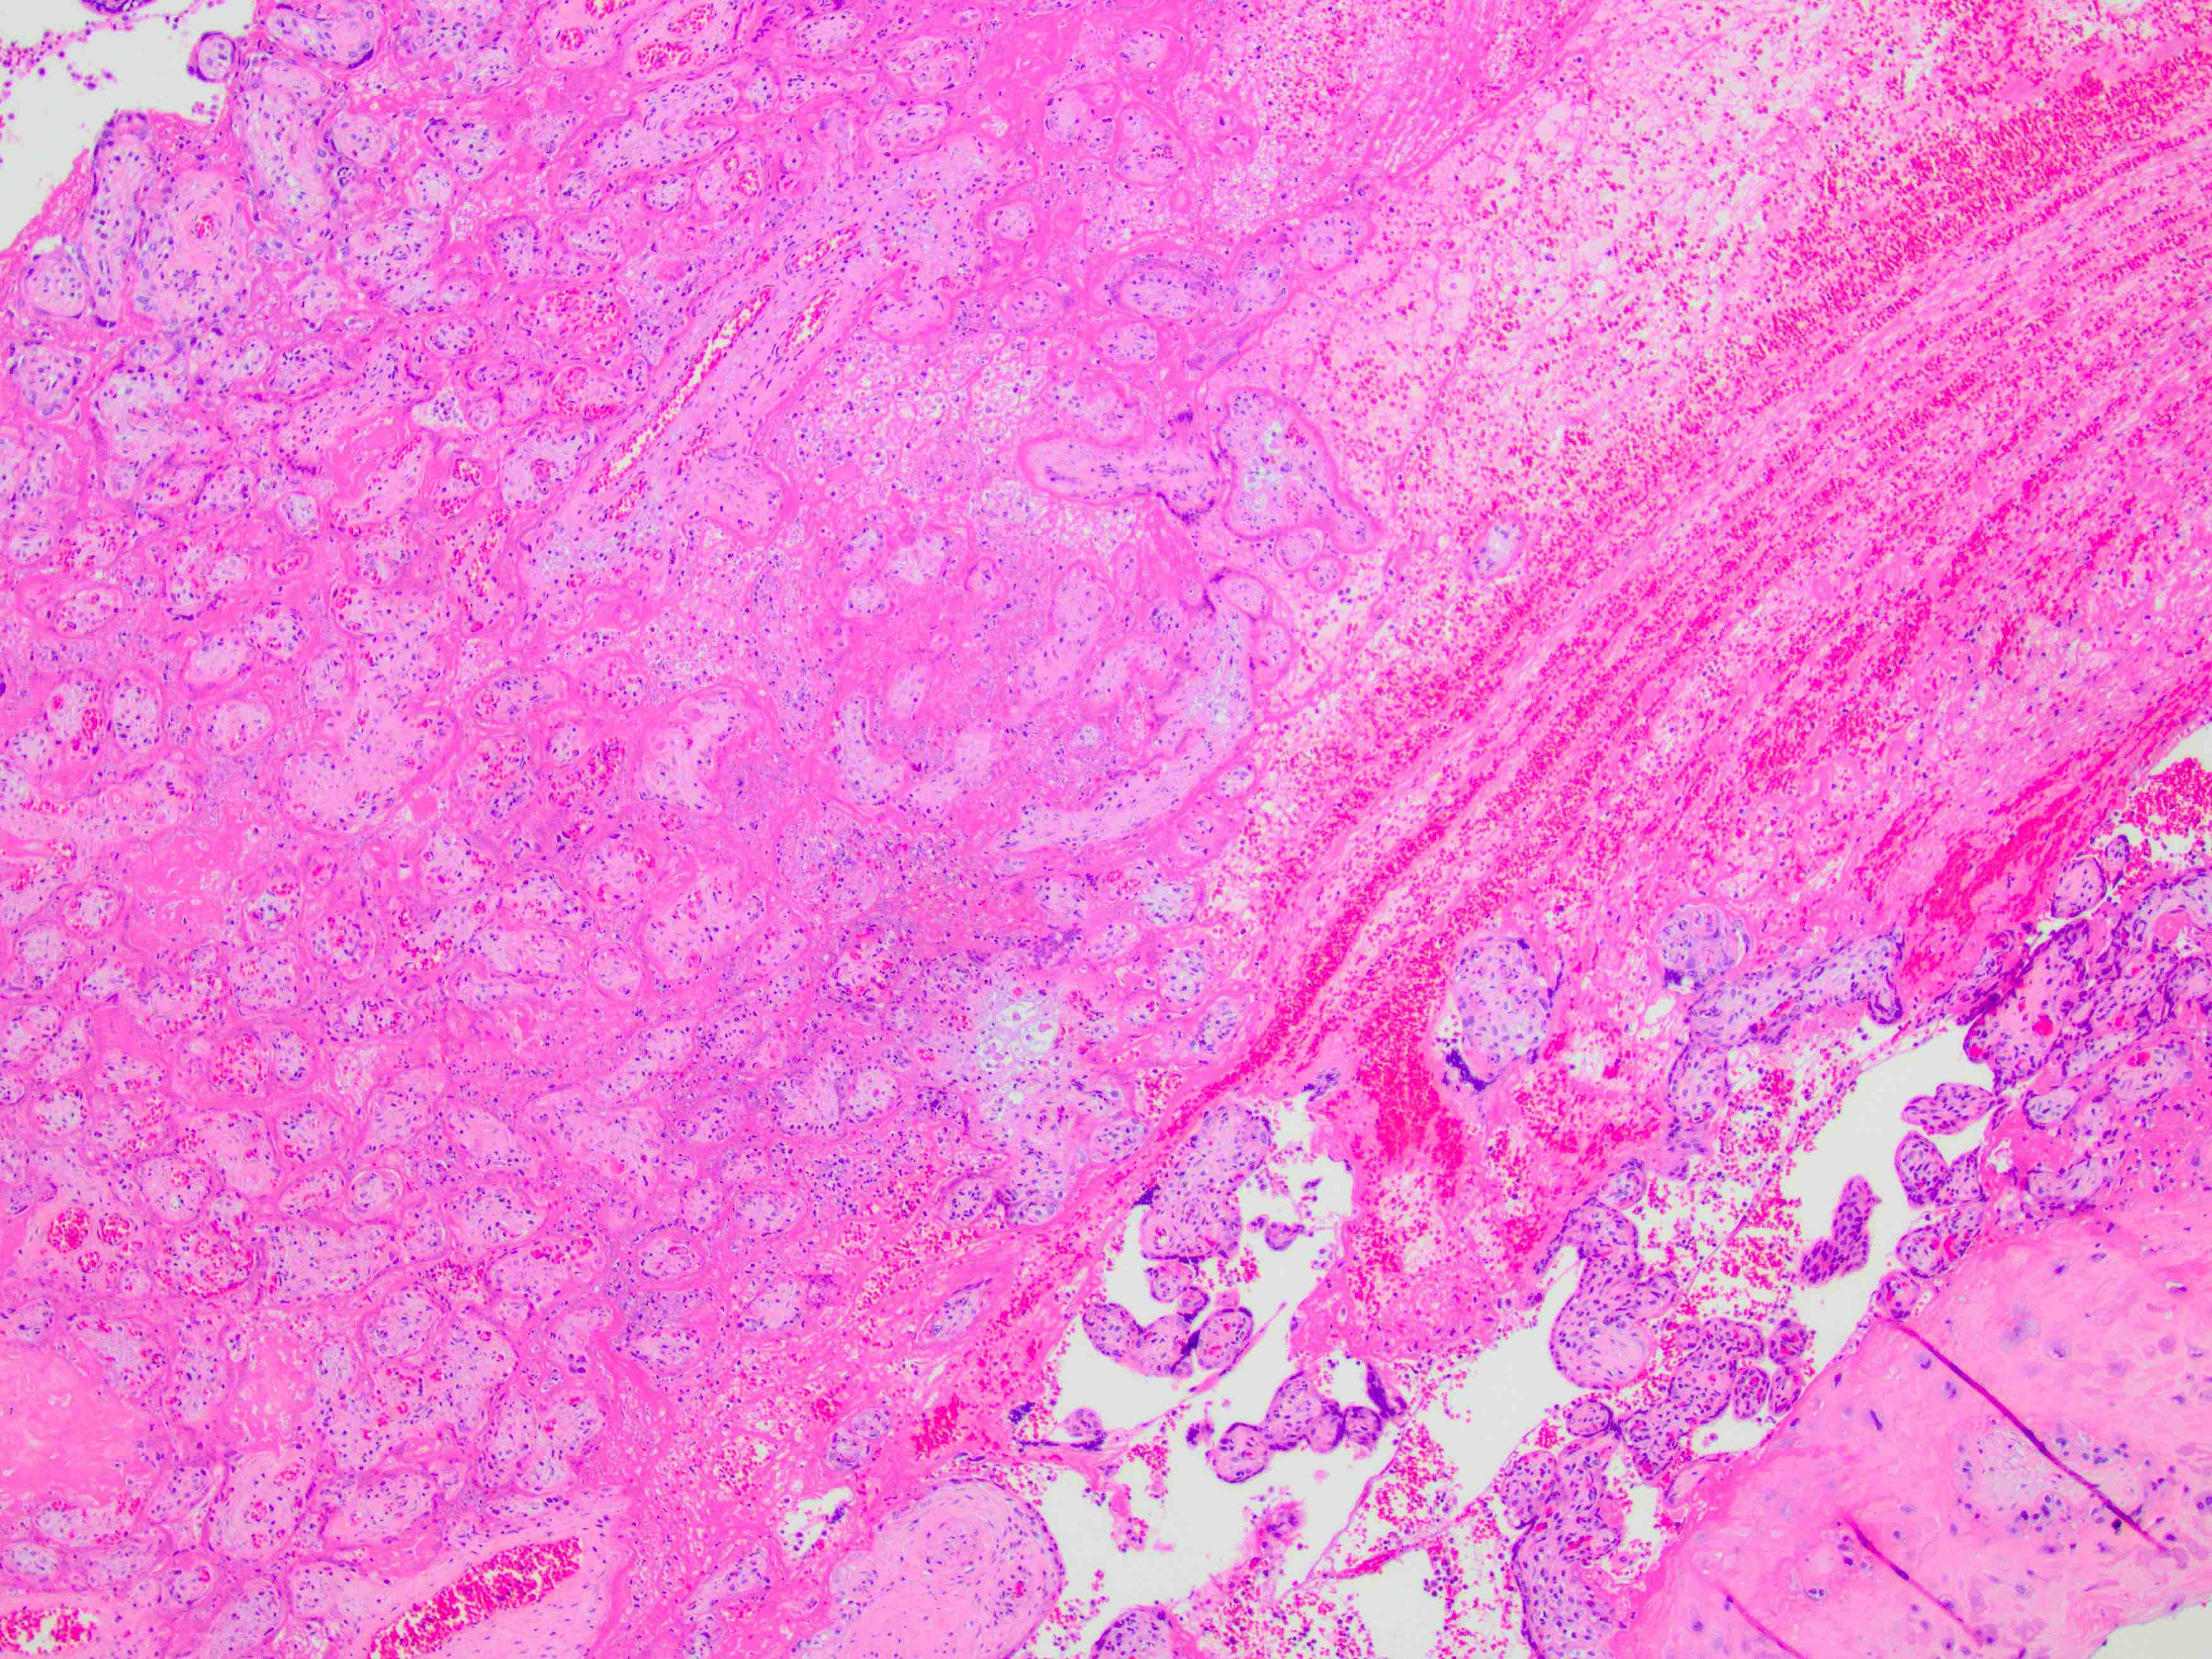 Perivillous fibrin deposition and trophoblast necrosis